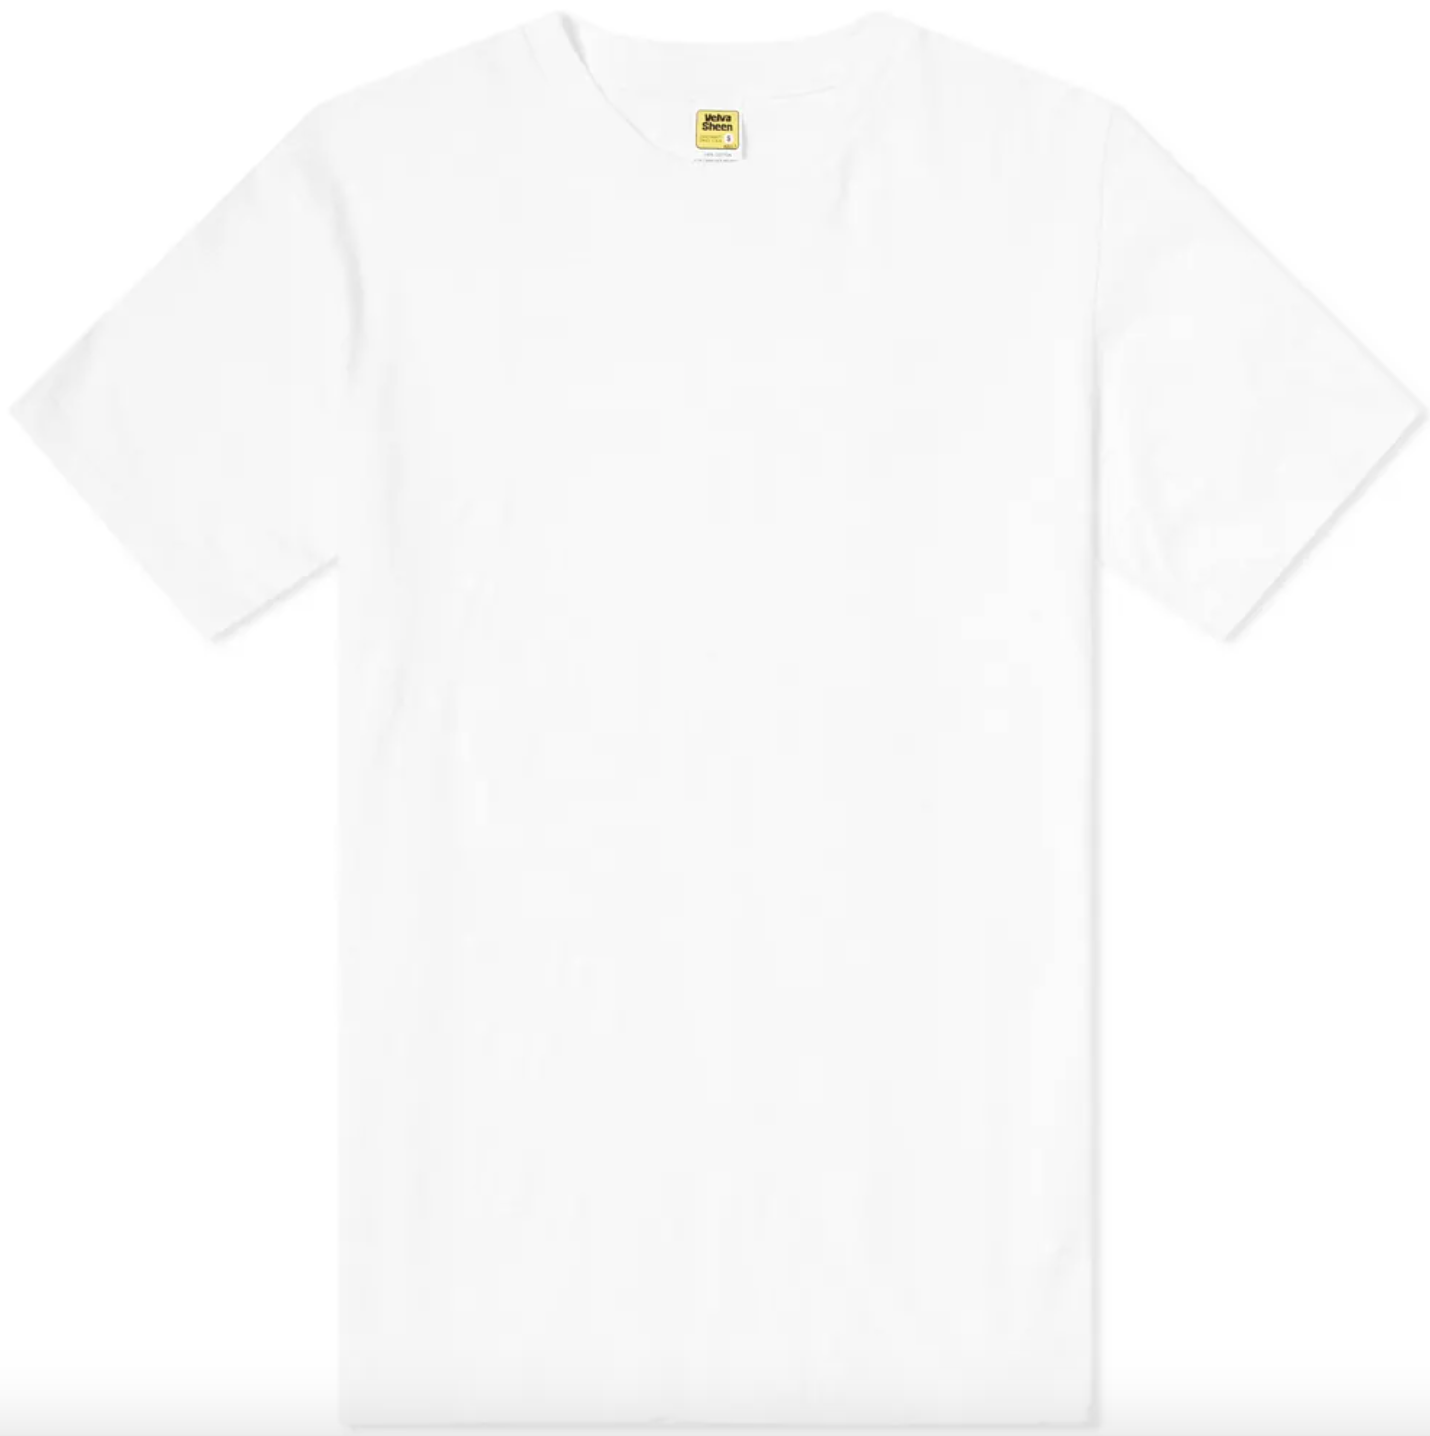 Reproducere Validering klip 16 Best Men's White T-Shirts 2021 - Top White Tees for Men